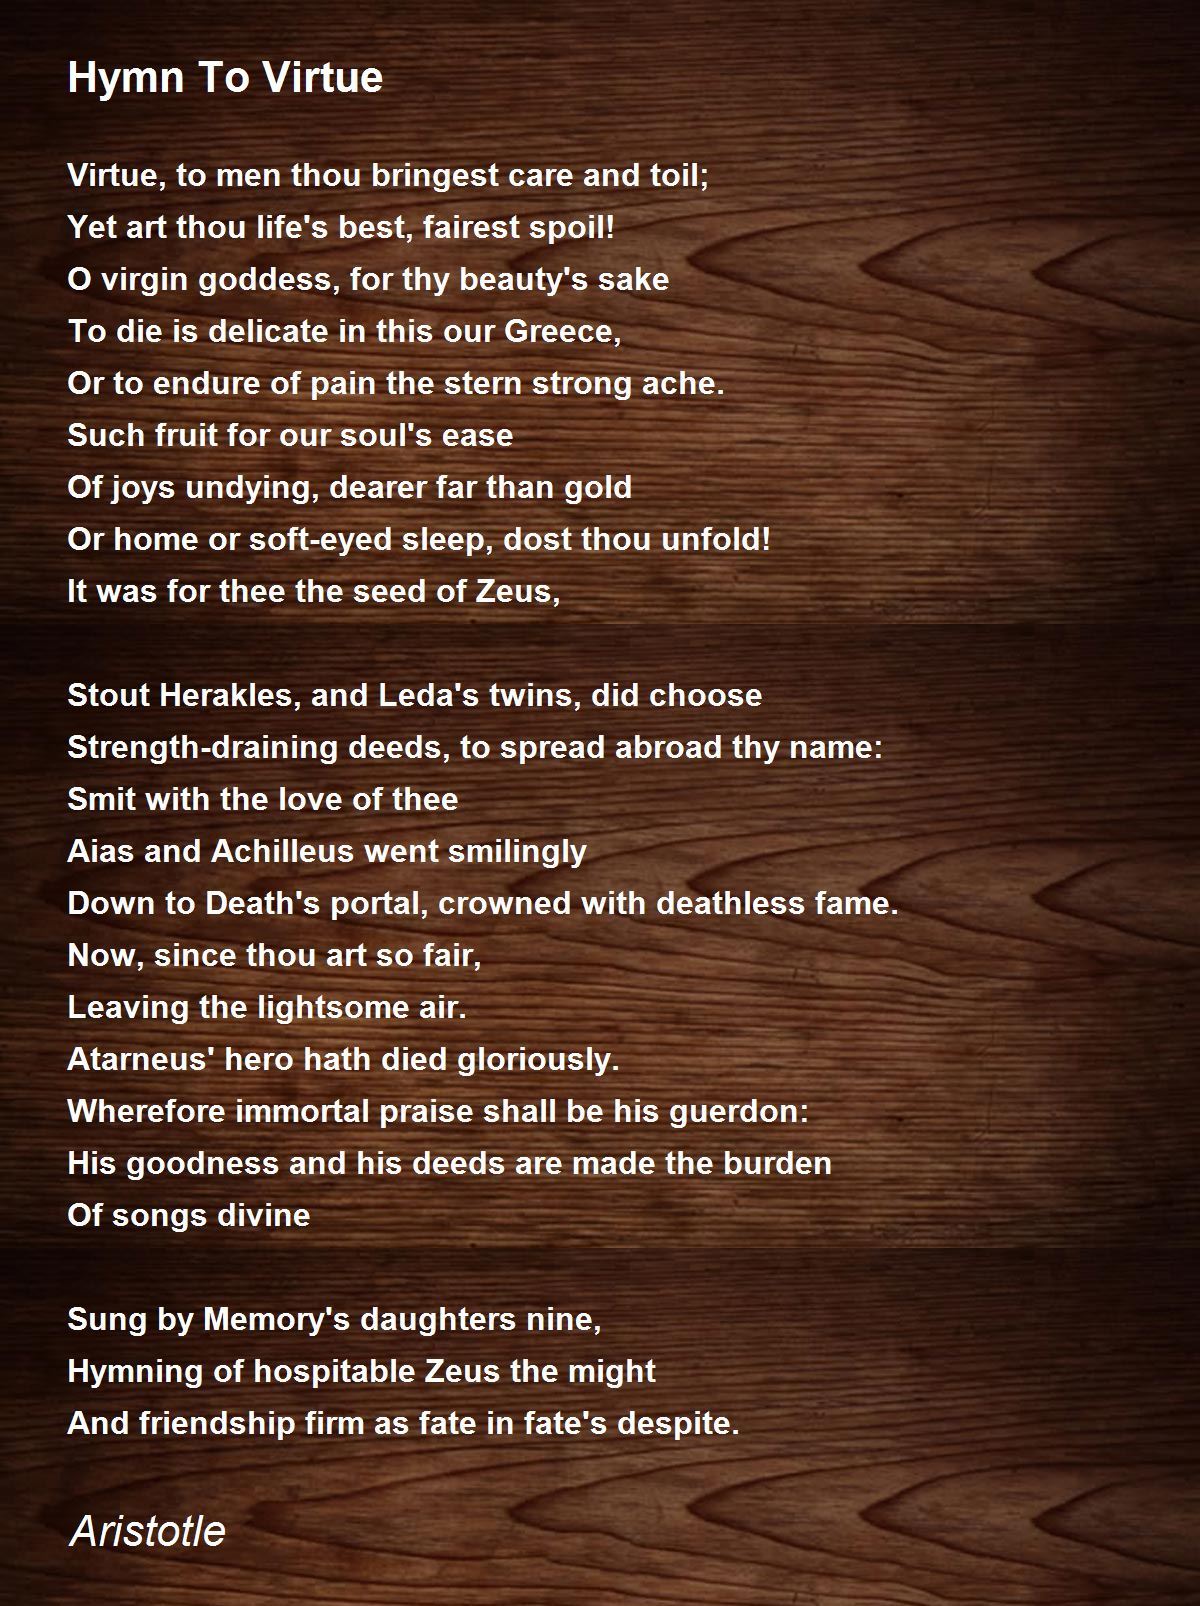 Hymn To Virtue Poem by Aristotle - Poem Hunter